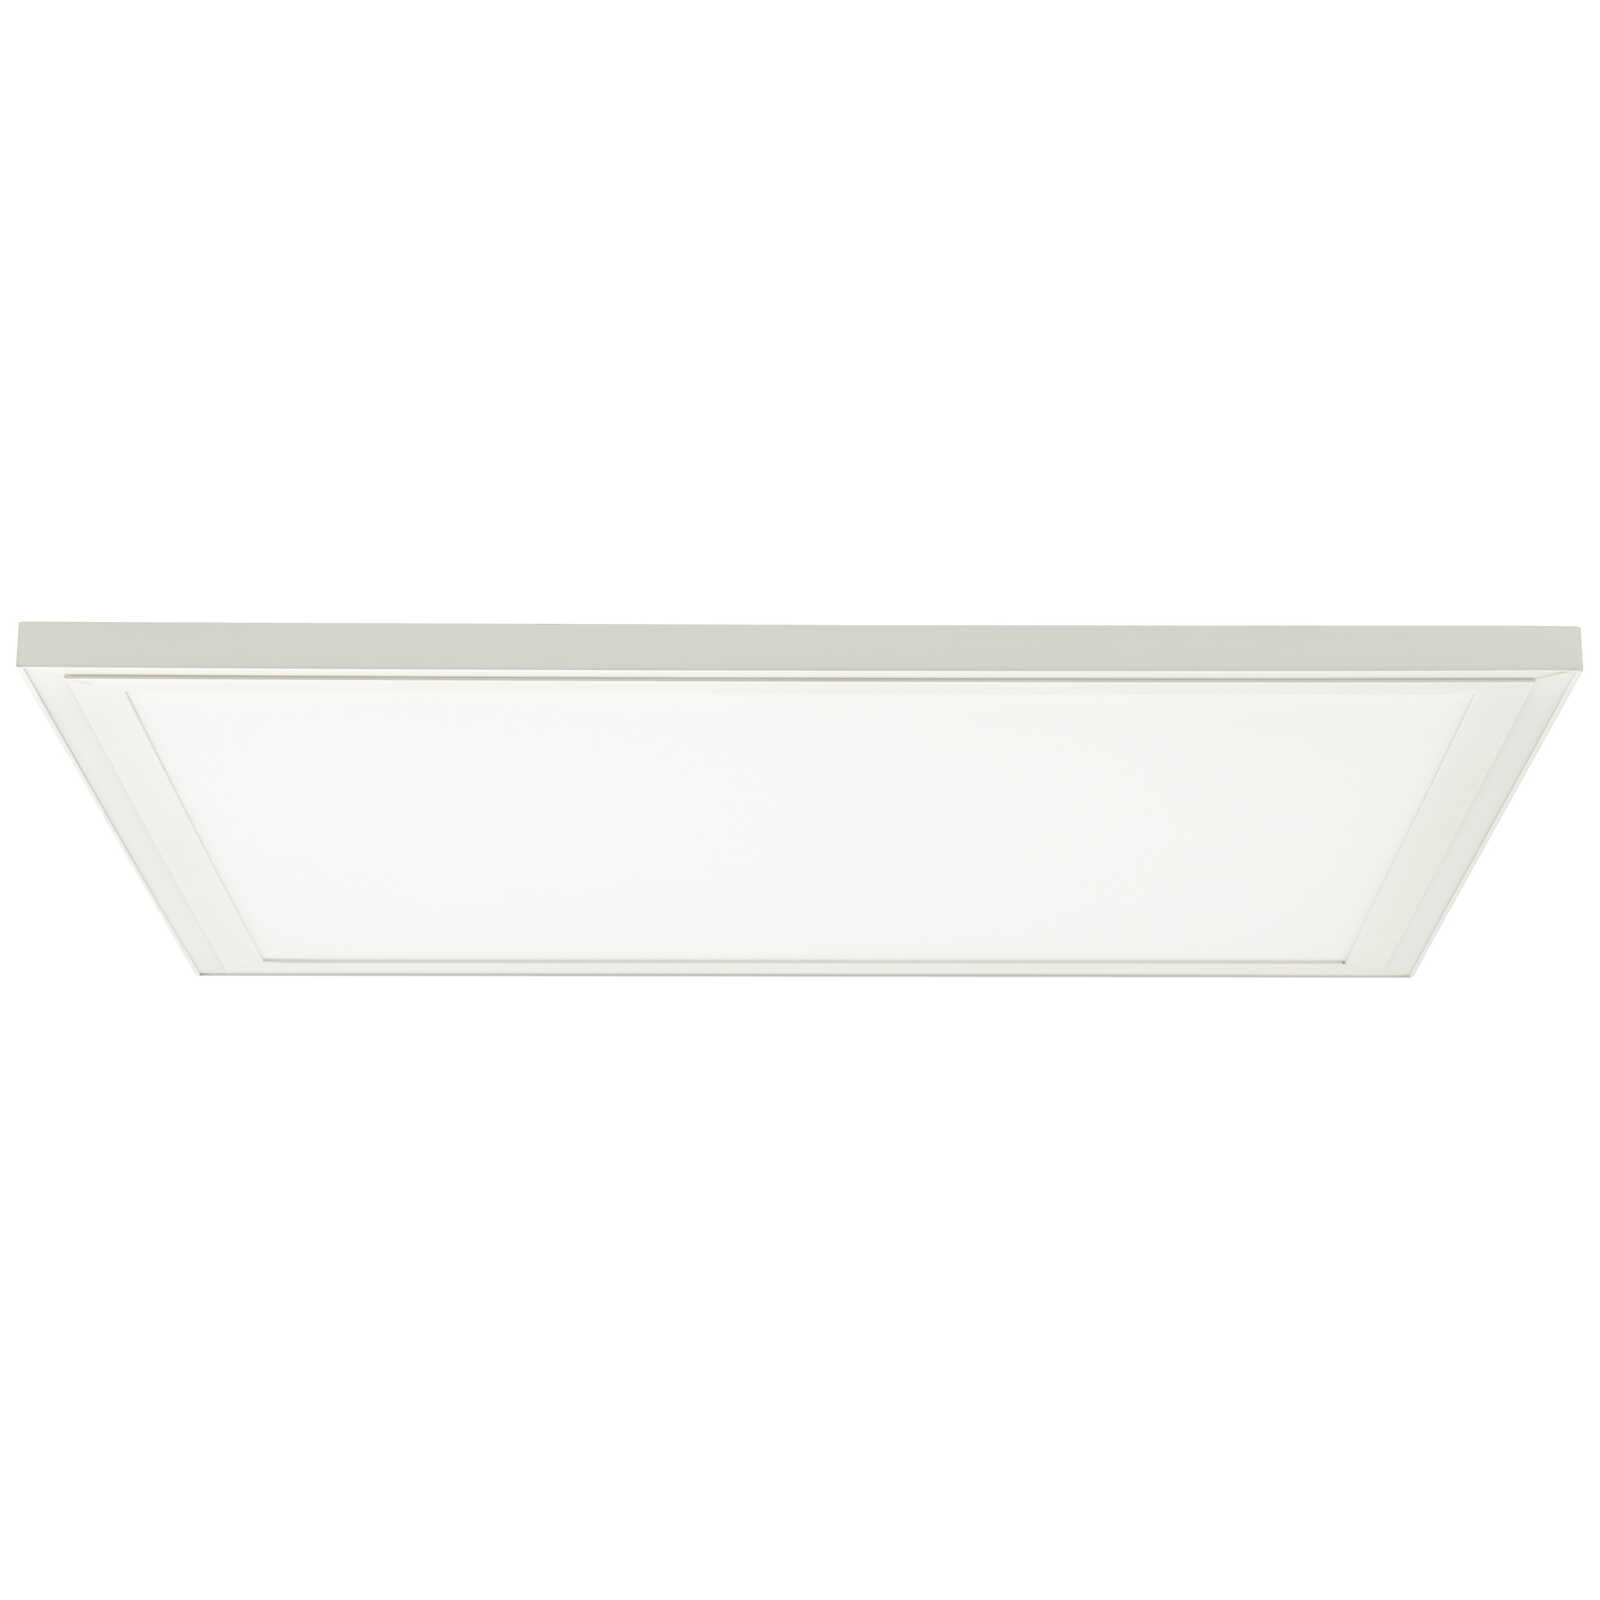             Metal ceiling light - Klaas 2 - White
        